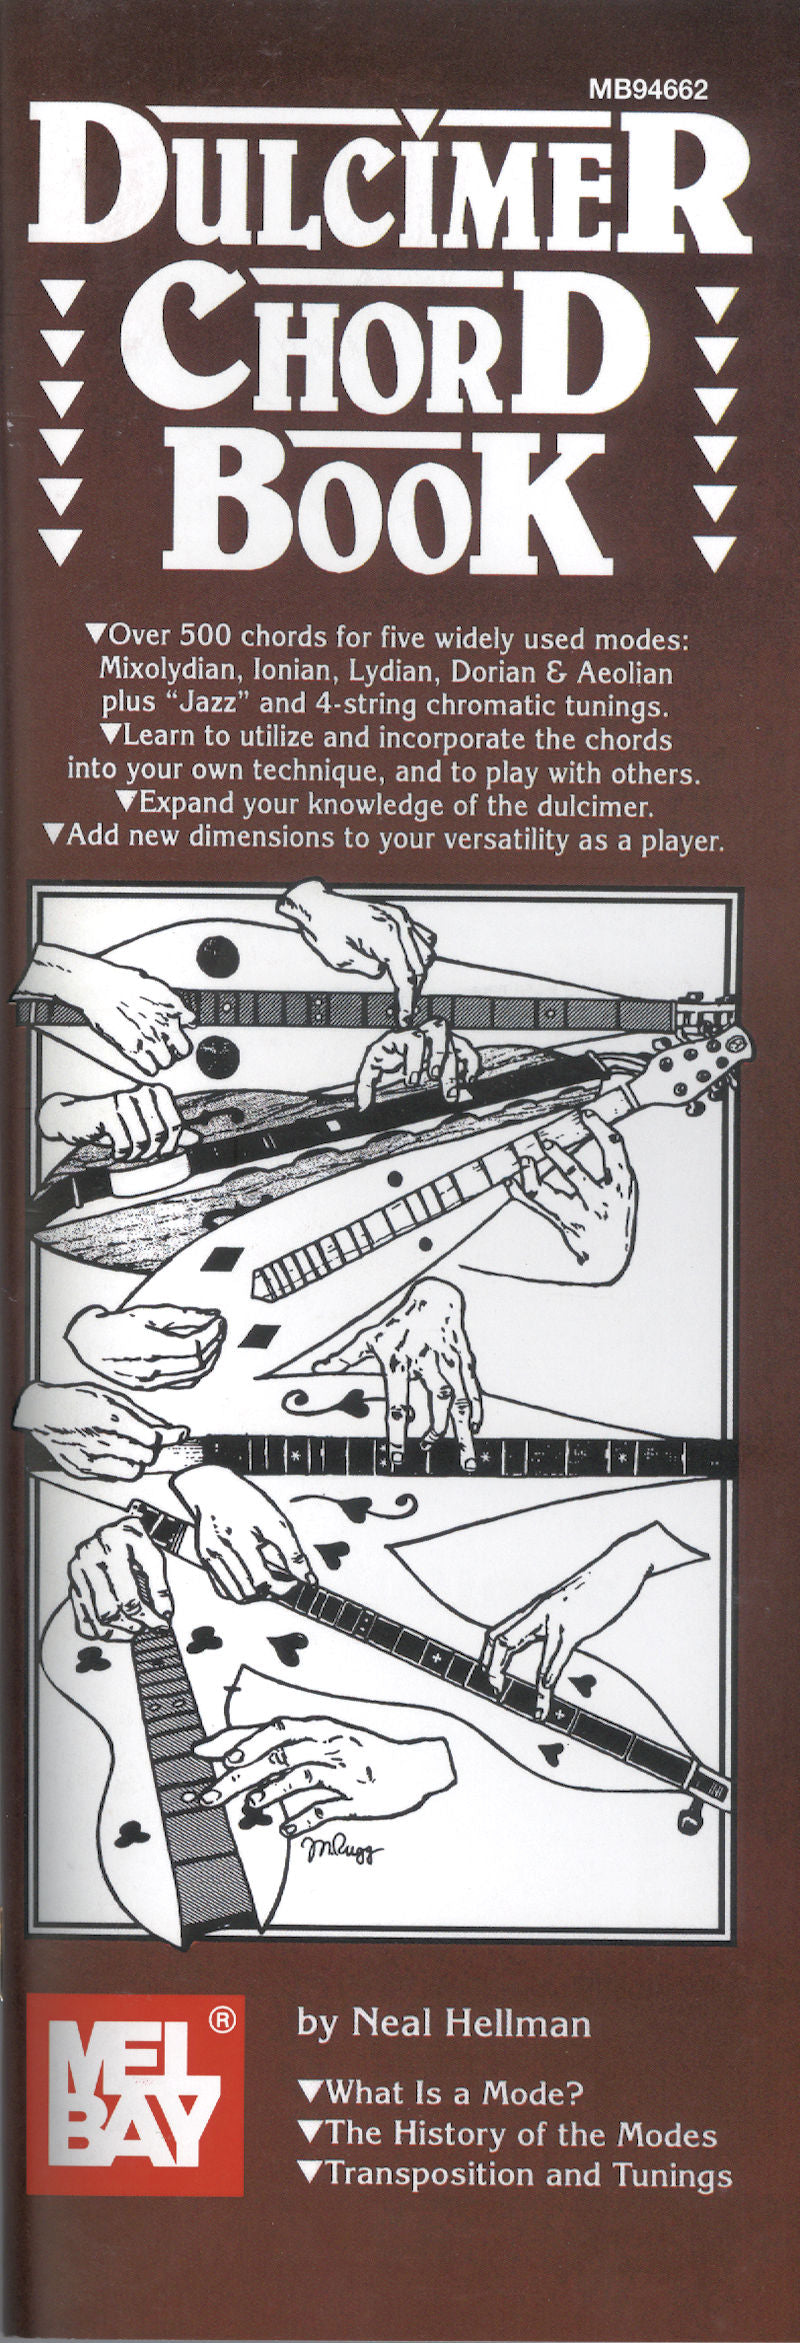 An intermediate guide to Dulcimer Chord Book - by Neal Hellman.